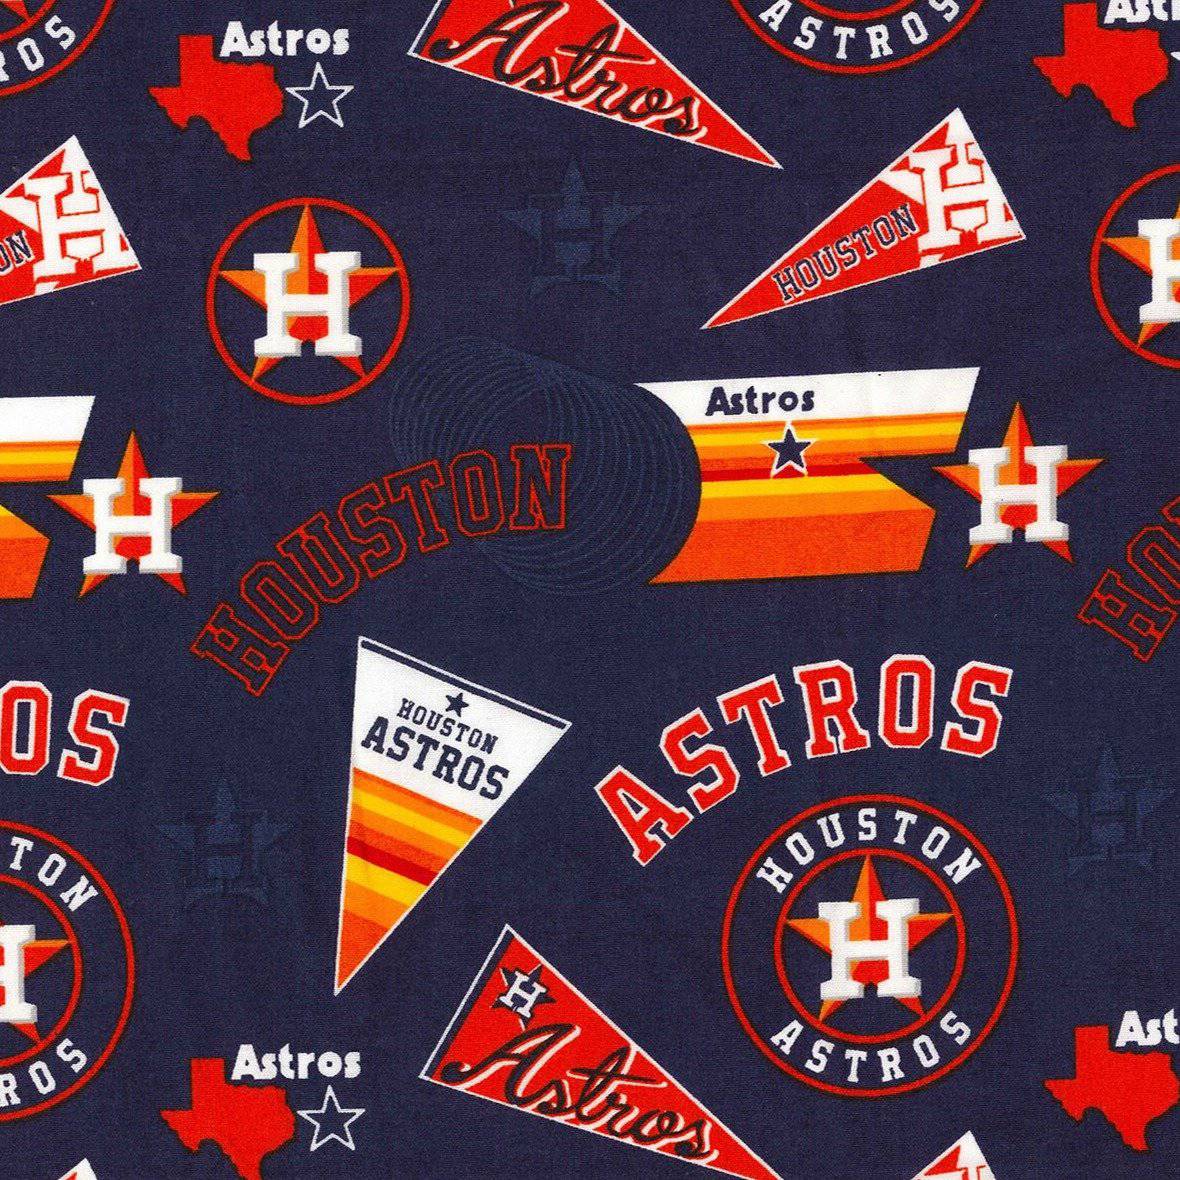 Astros - Cotton Holdings Inc.